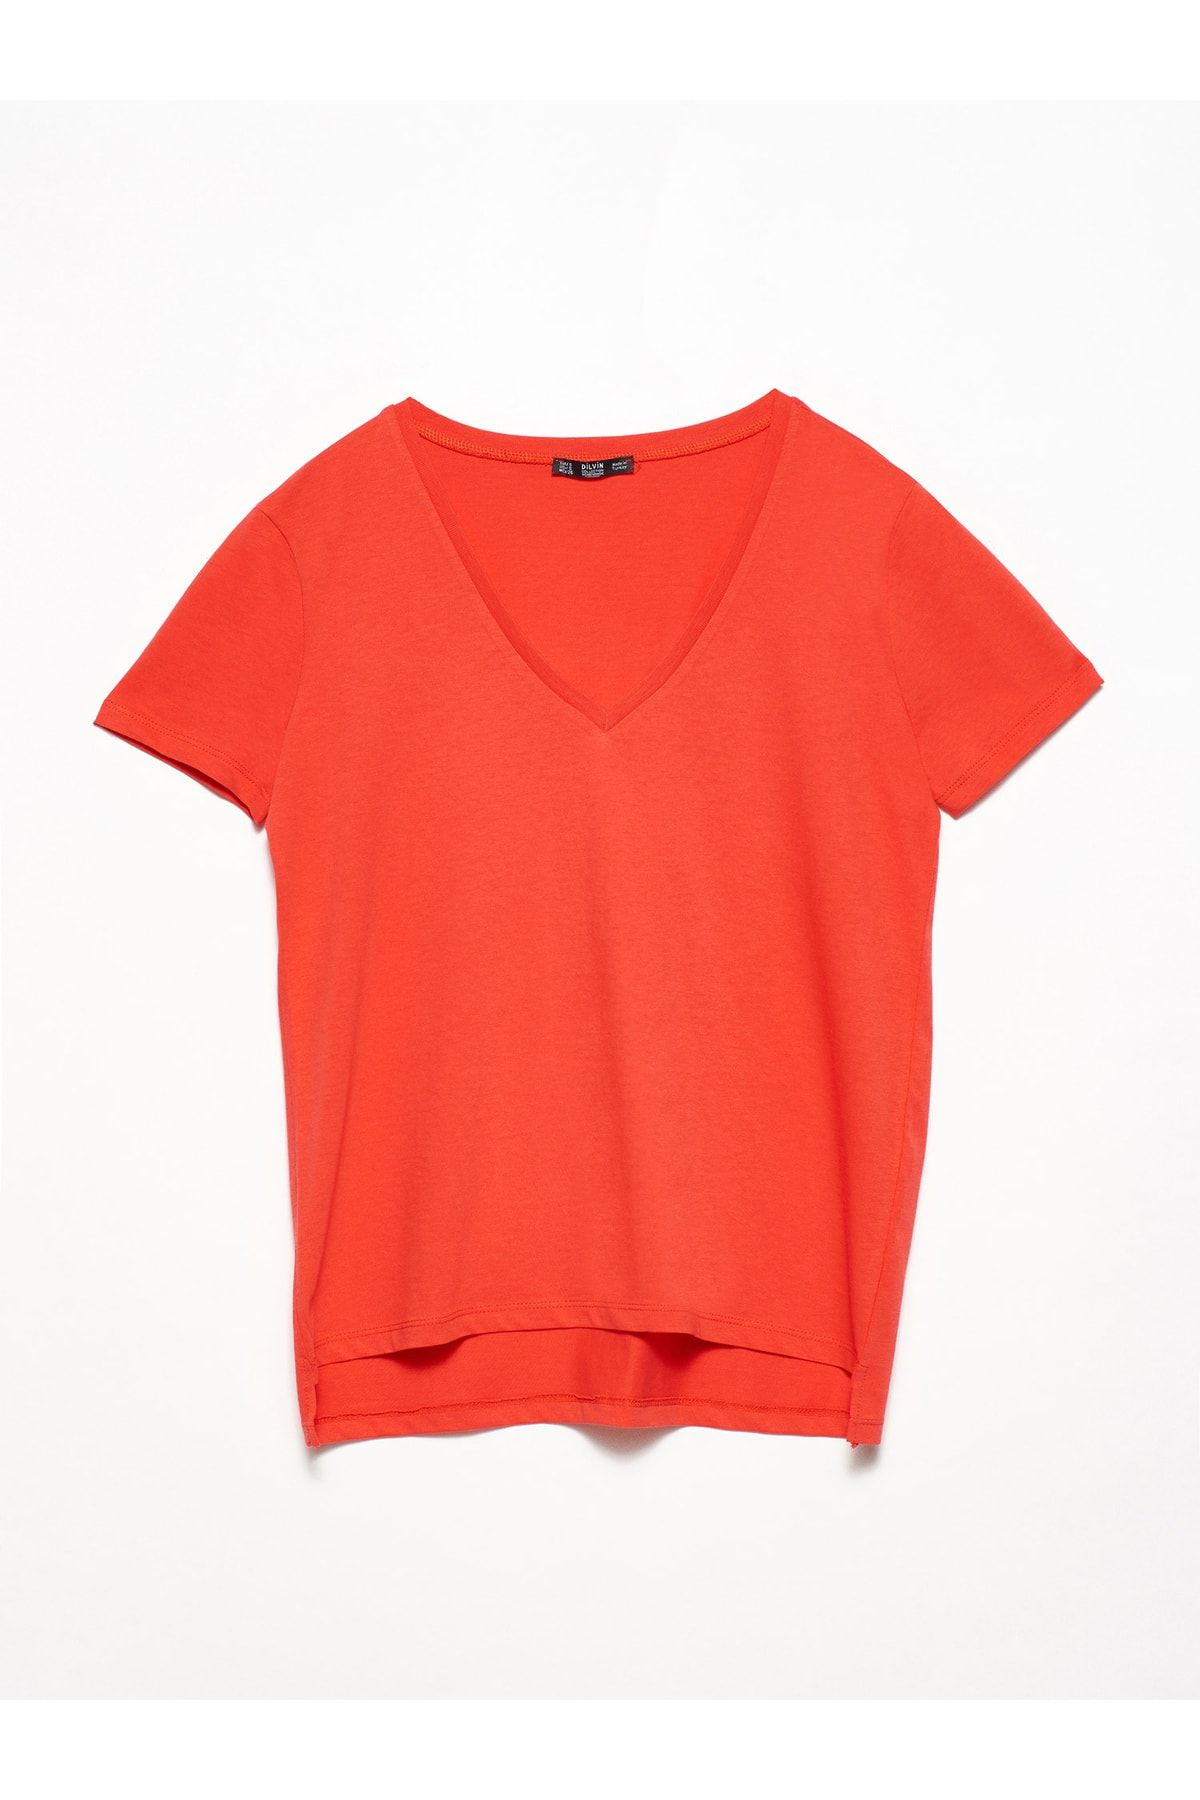 Dilvin Kadın Kırmızı V Yaka Basic T-Shirt 101A03470